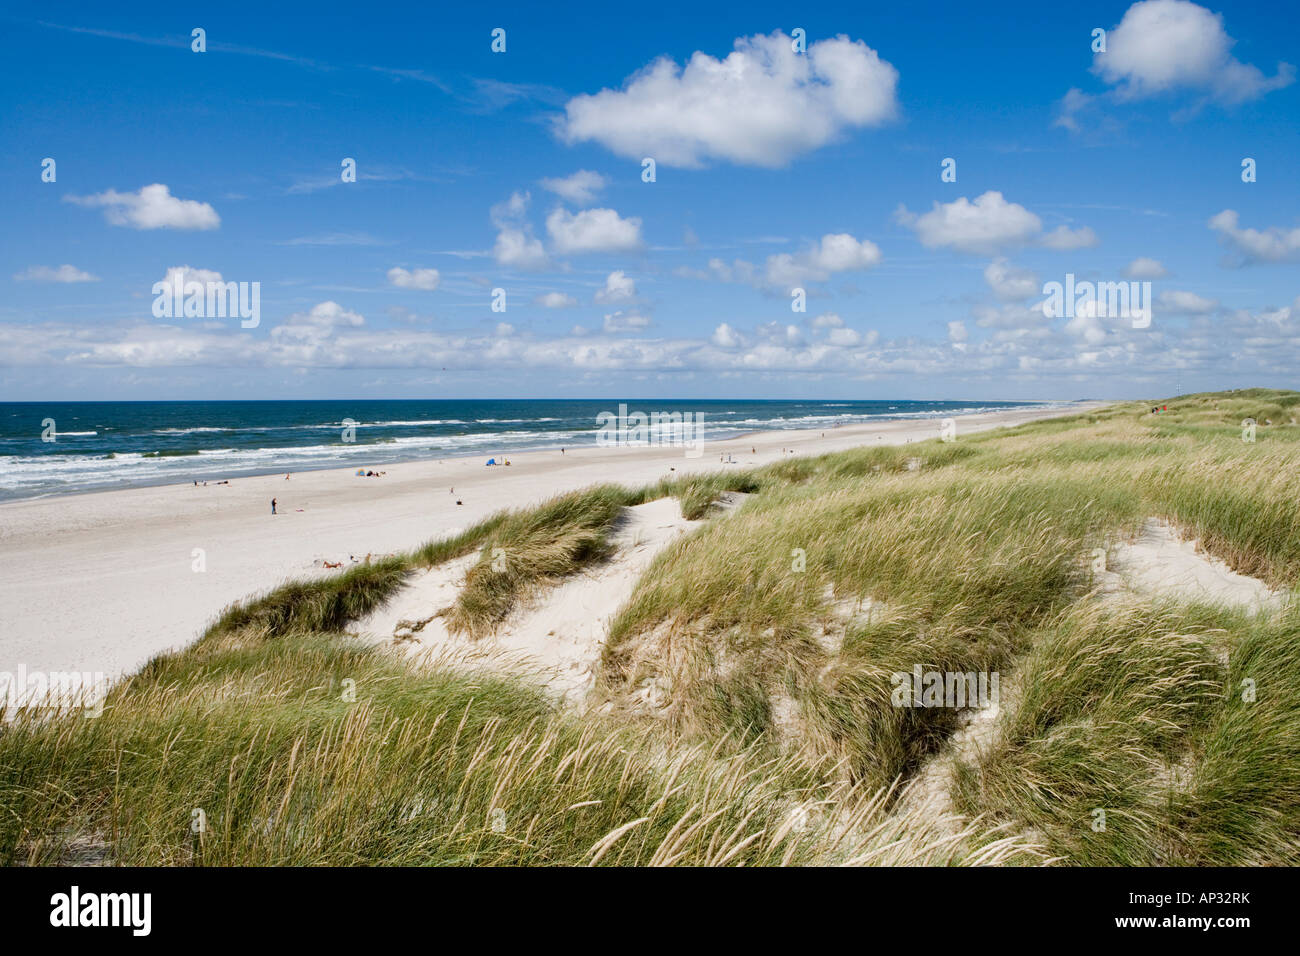 Melting kolbøtte hjul Beach henne strand hi-res stock photography and images - Alamy